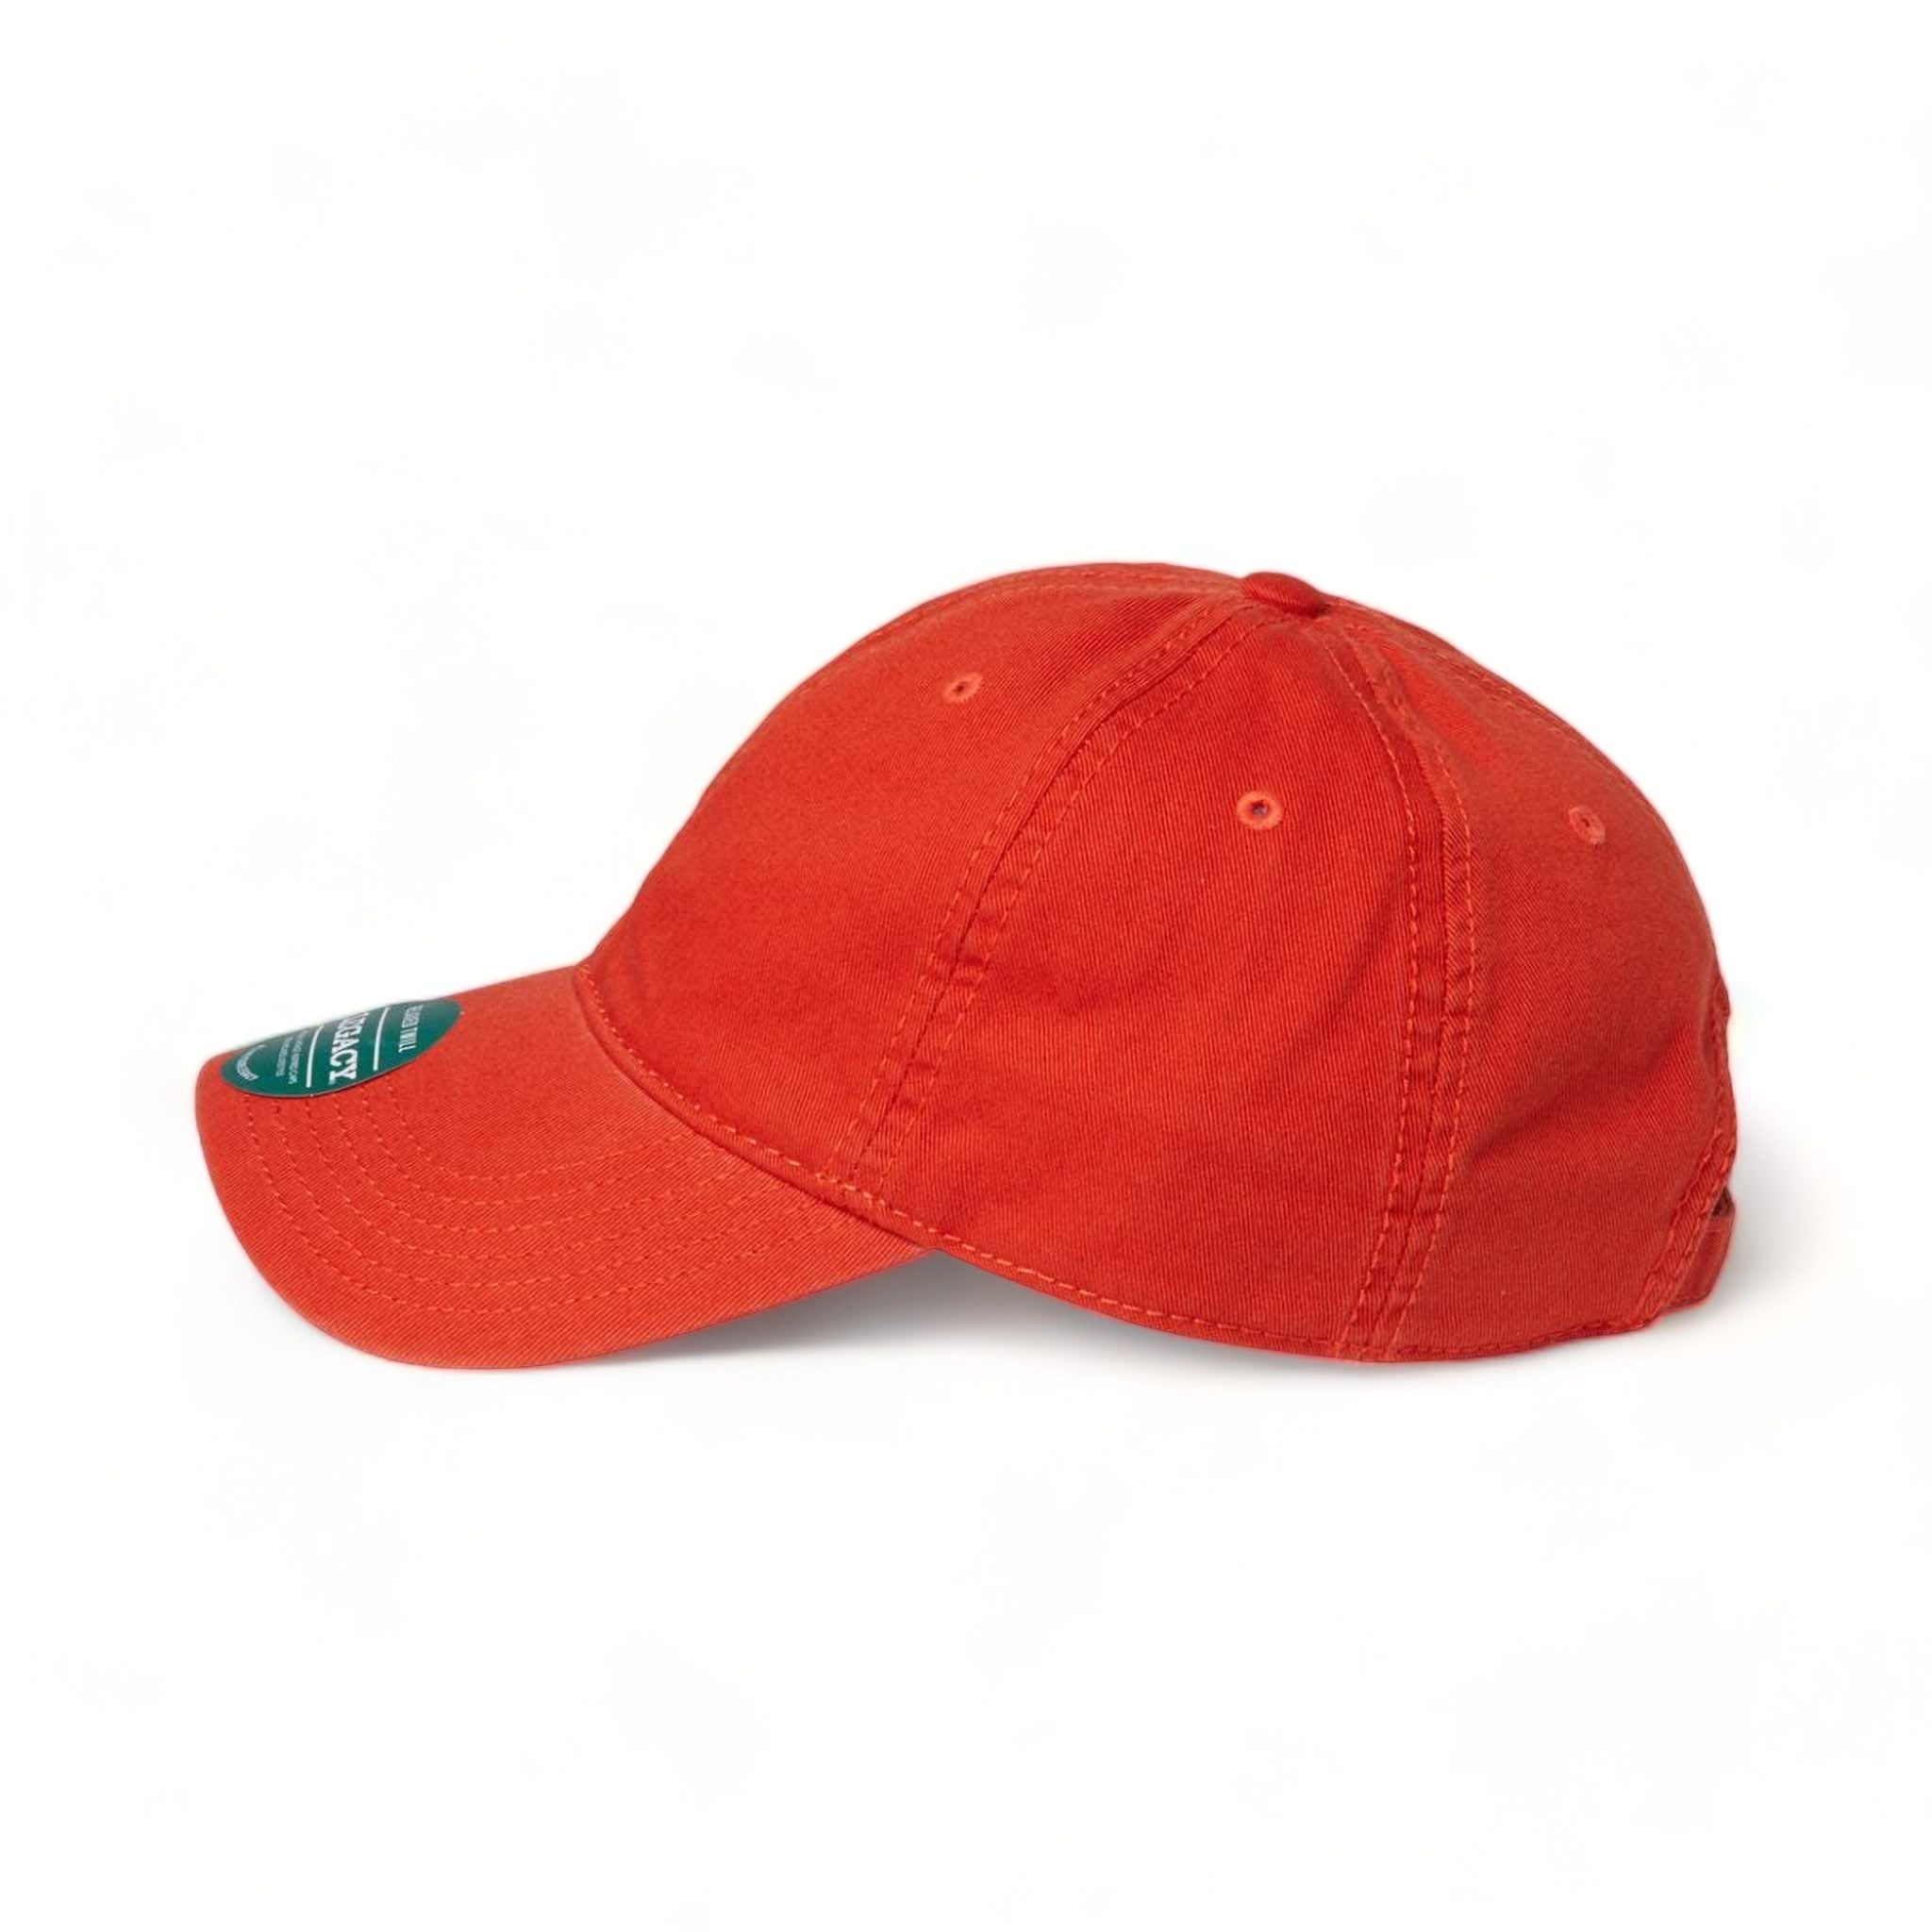 Side view of LEGACY EZA custom hat in mandarin orange